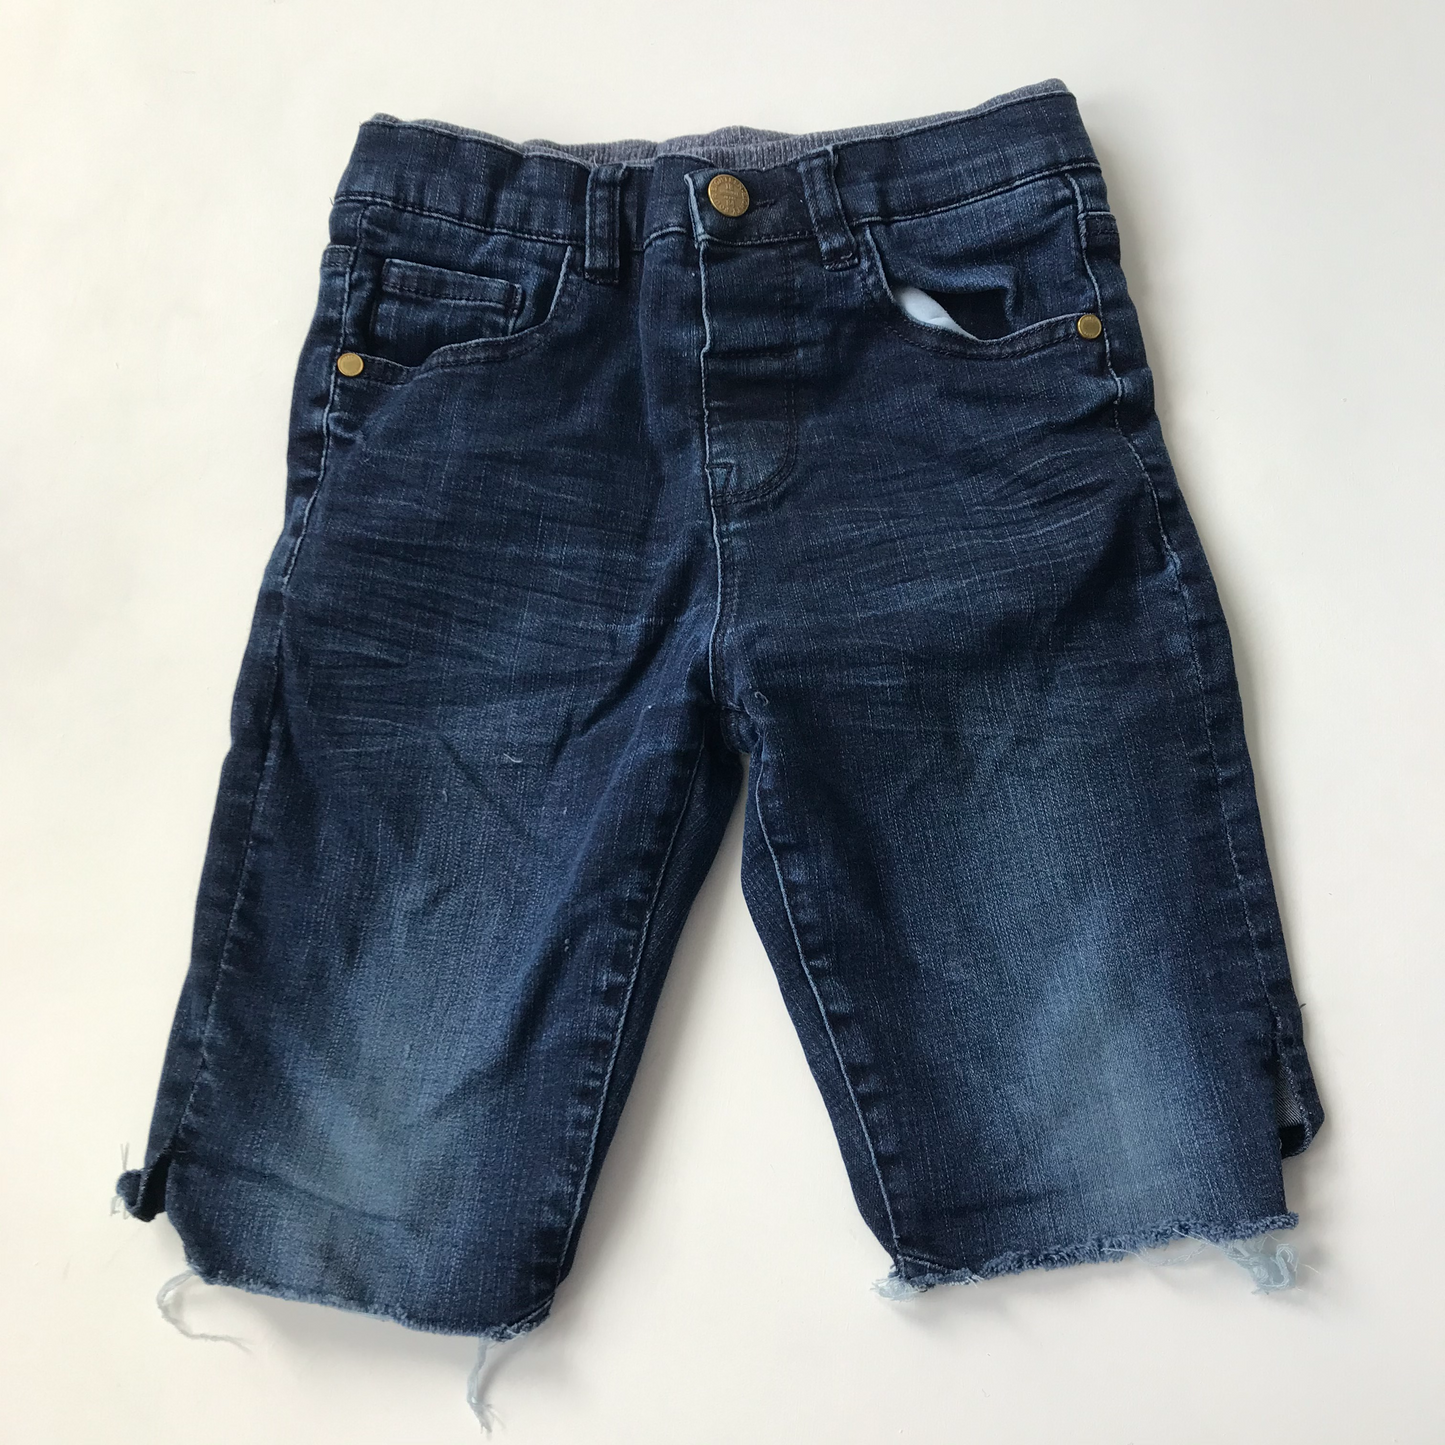 Shorts - Ripped Denim & Jersey Waistband - Age 7